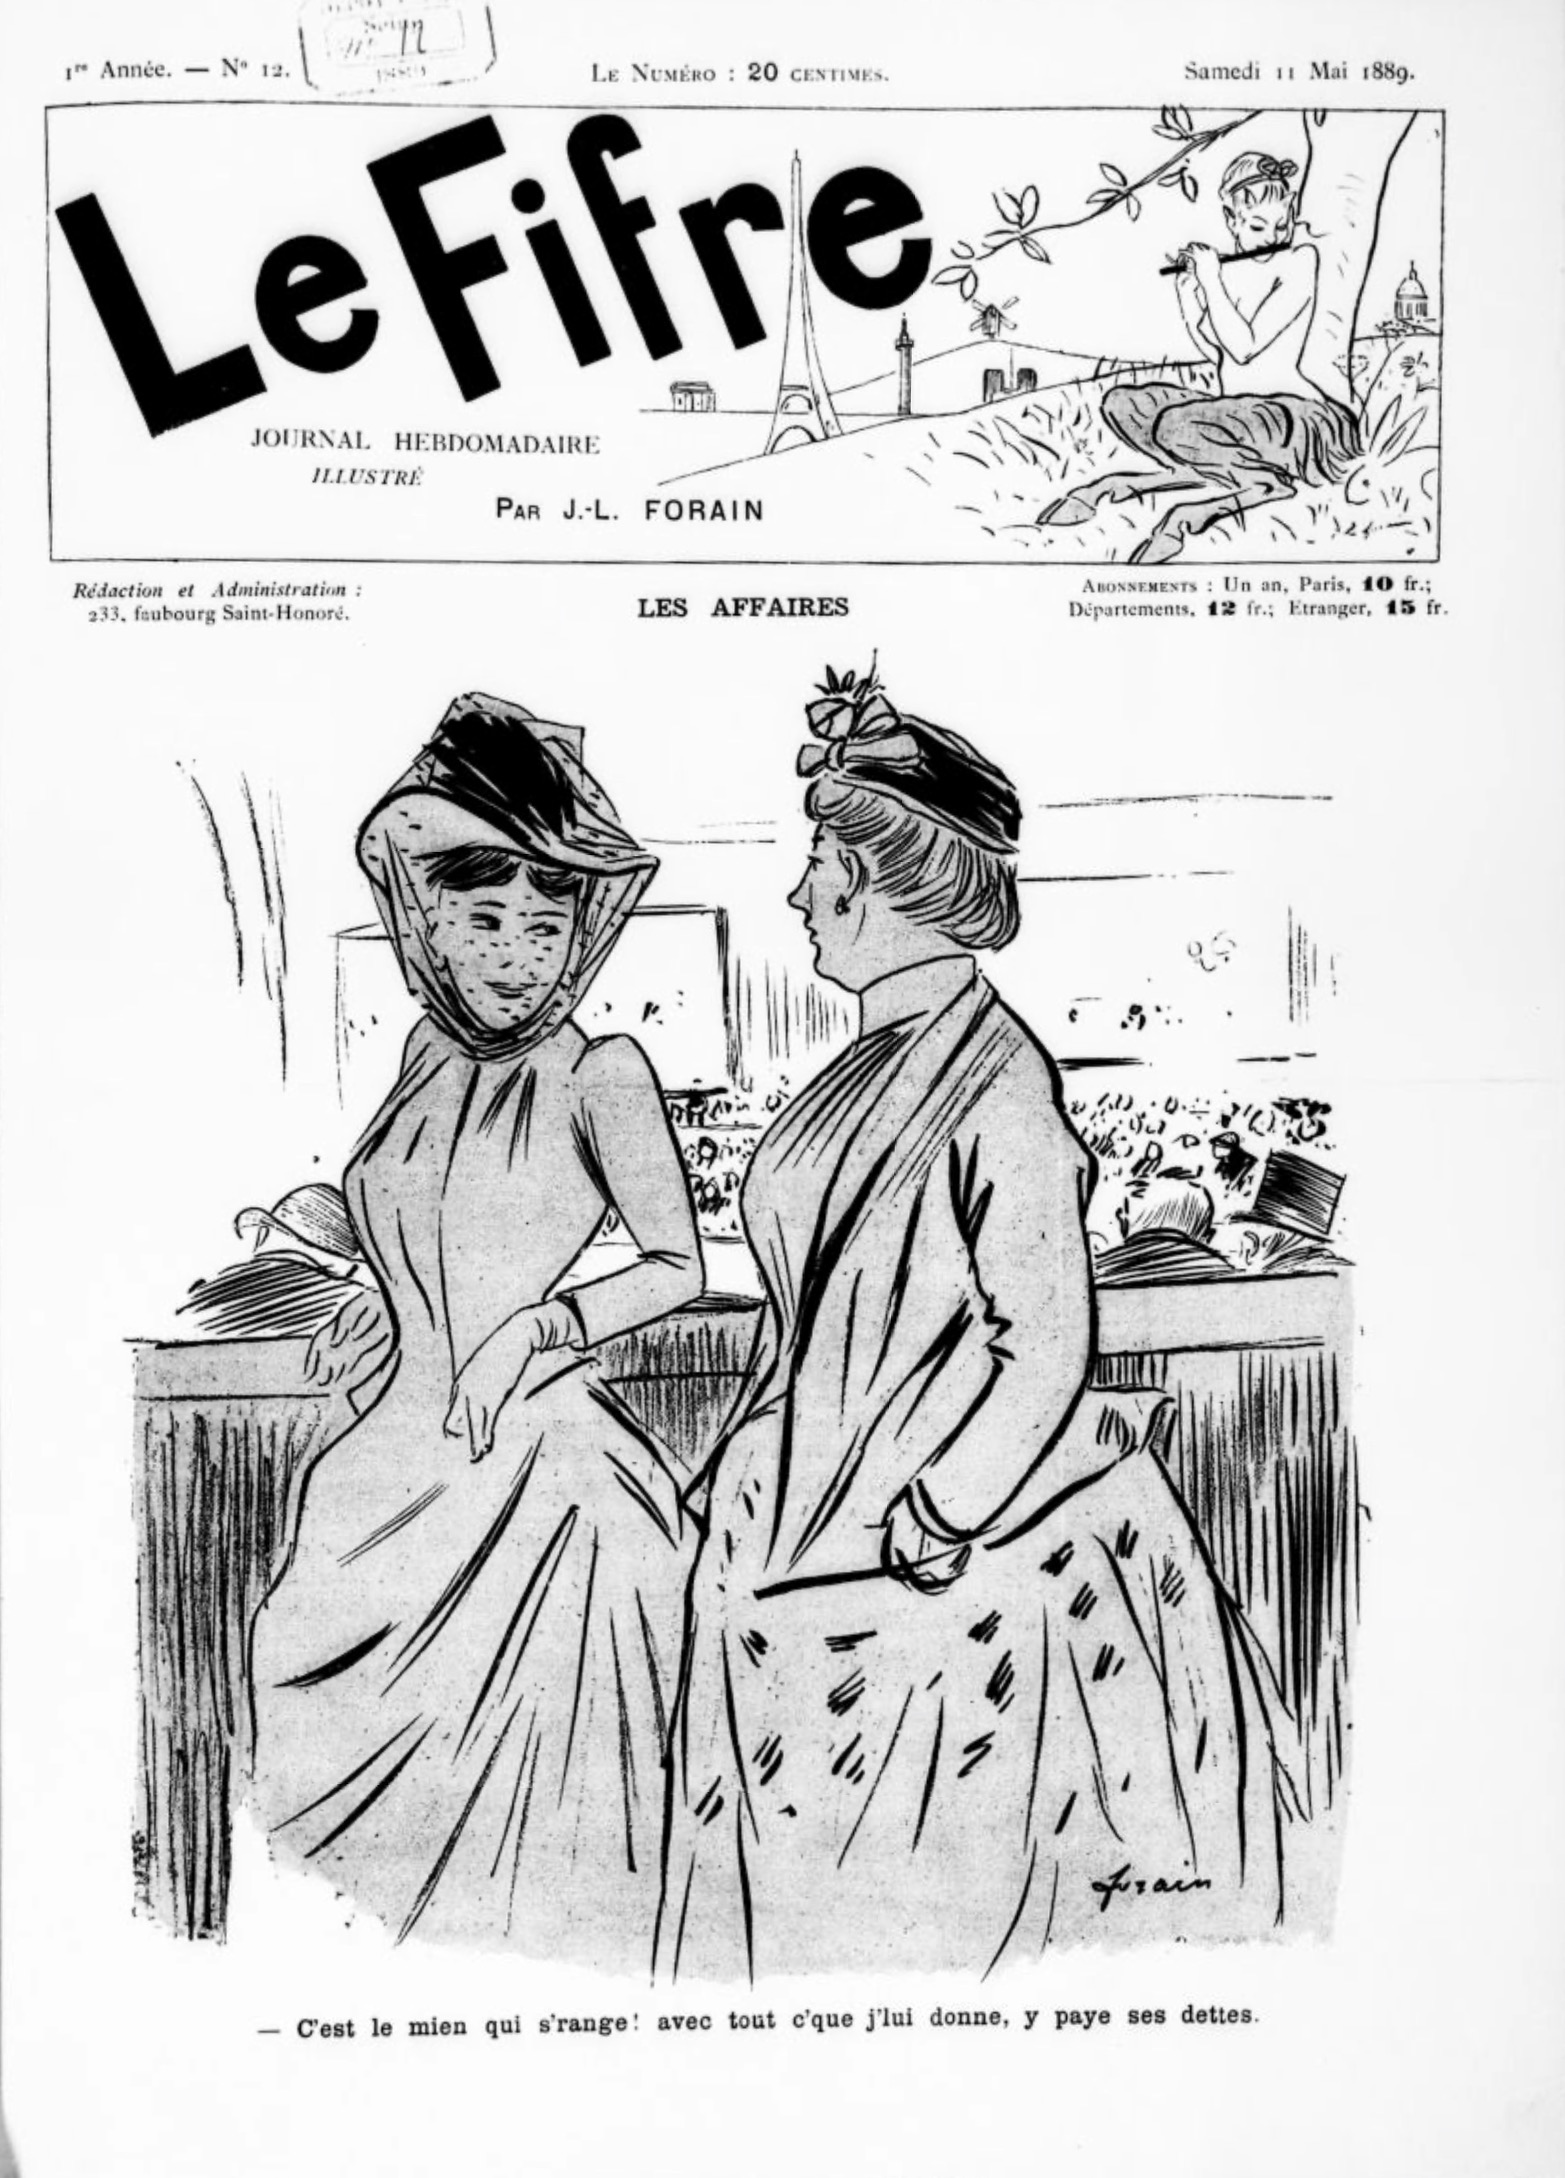 Le Fifre (1889)